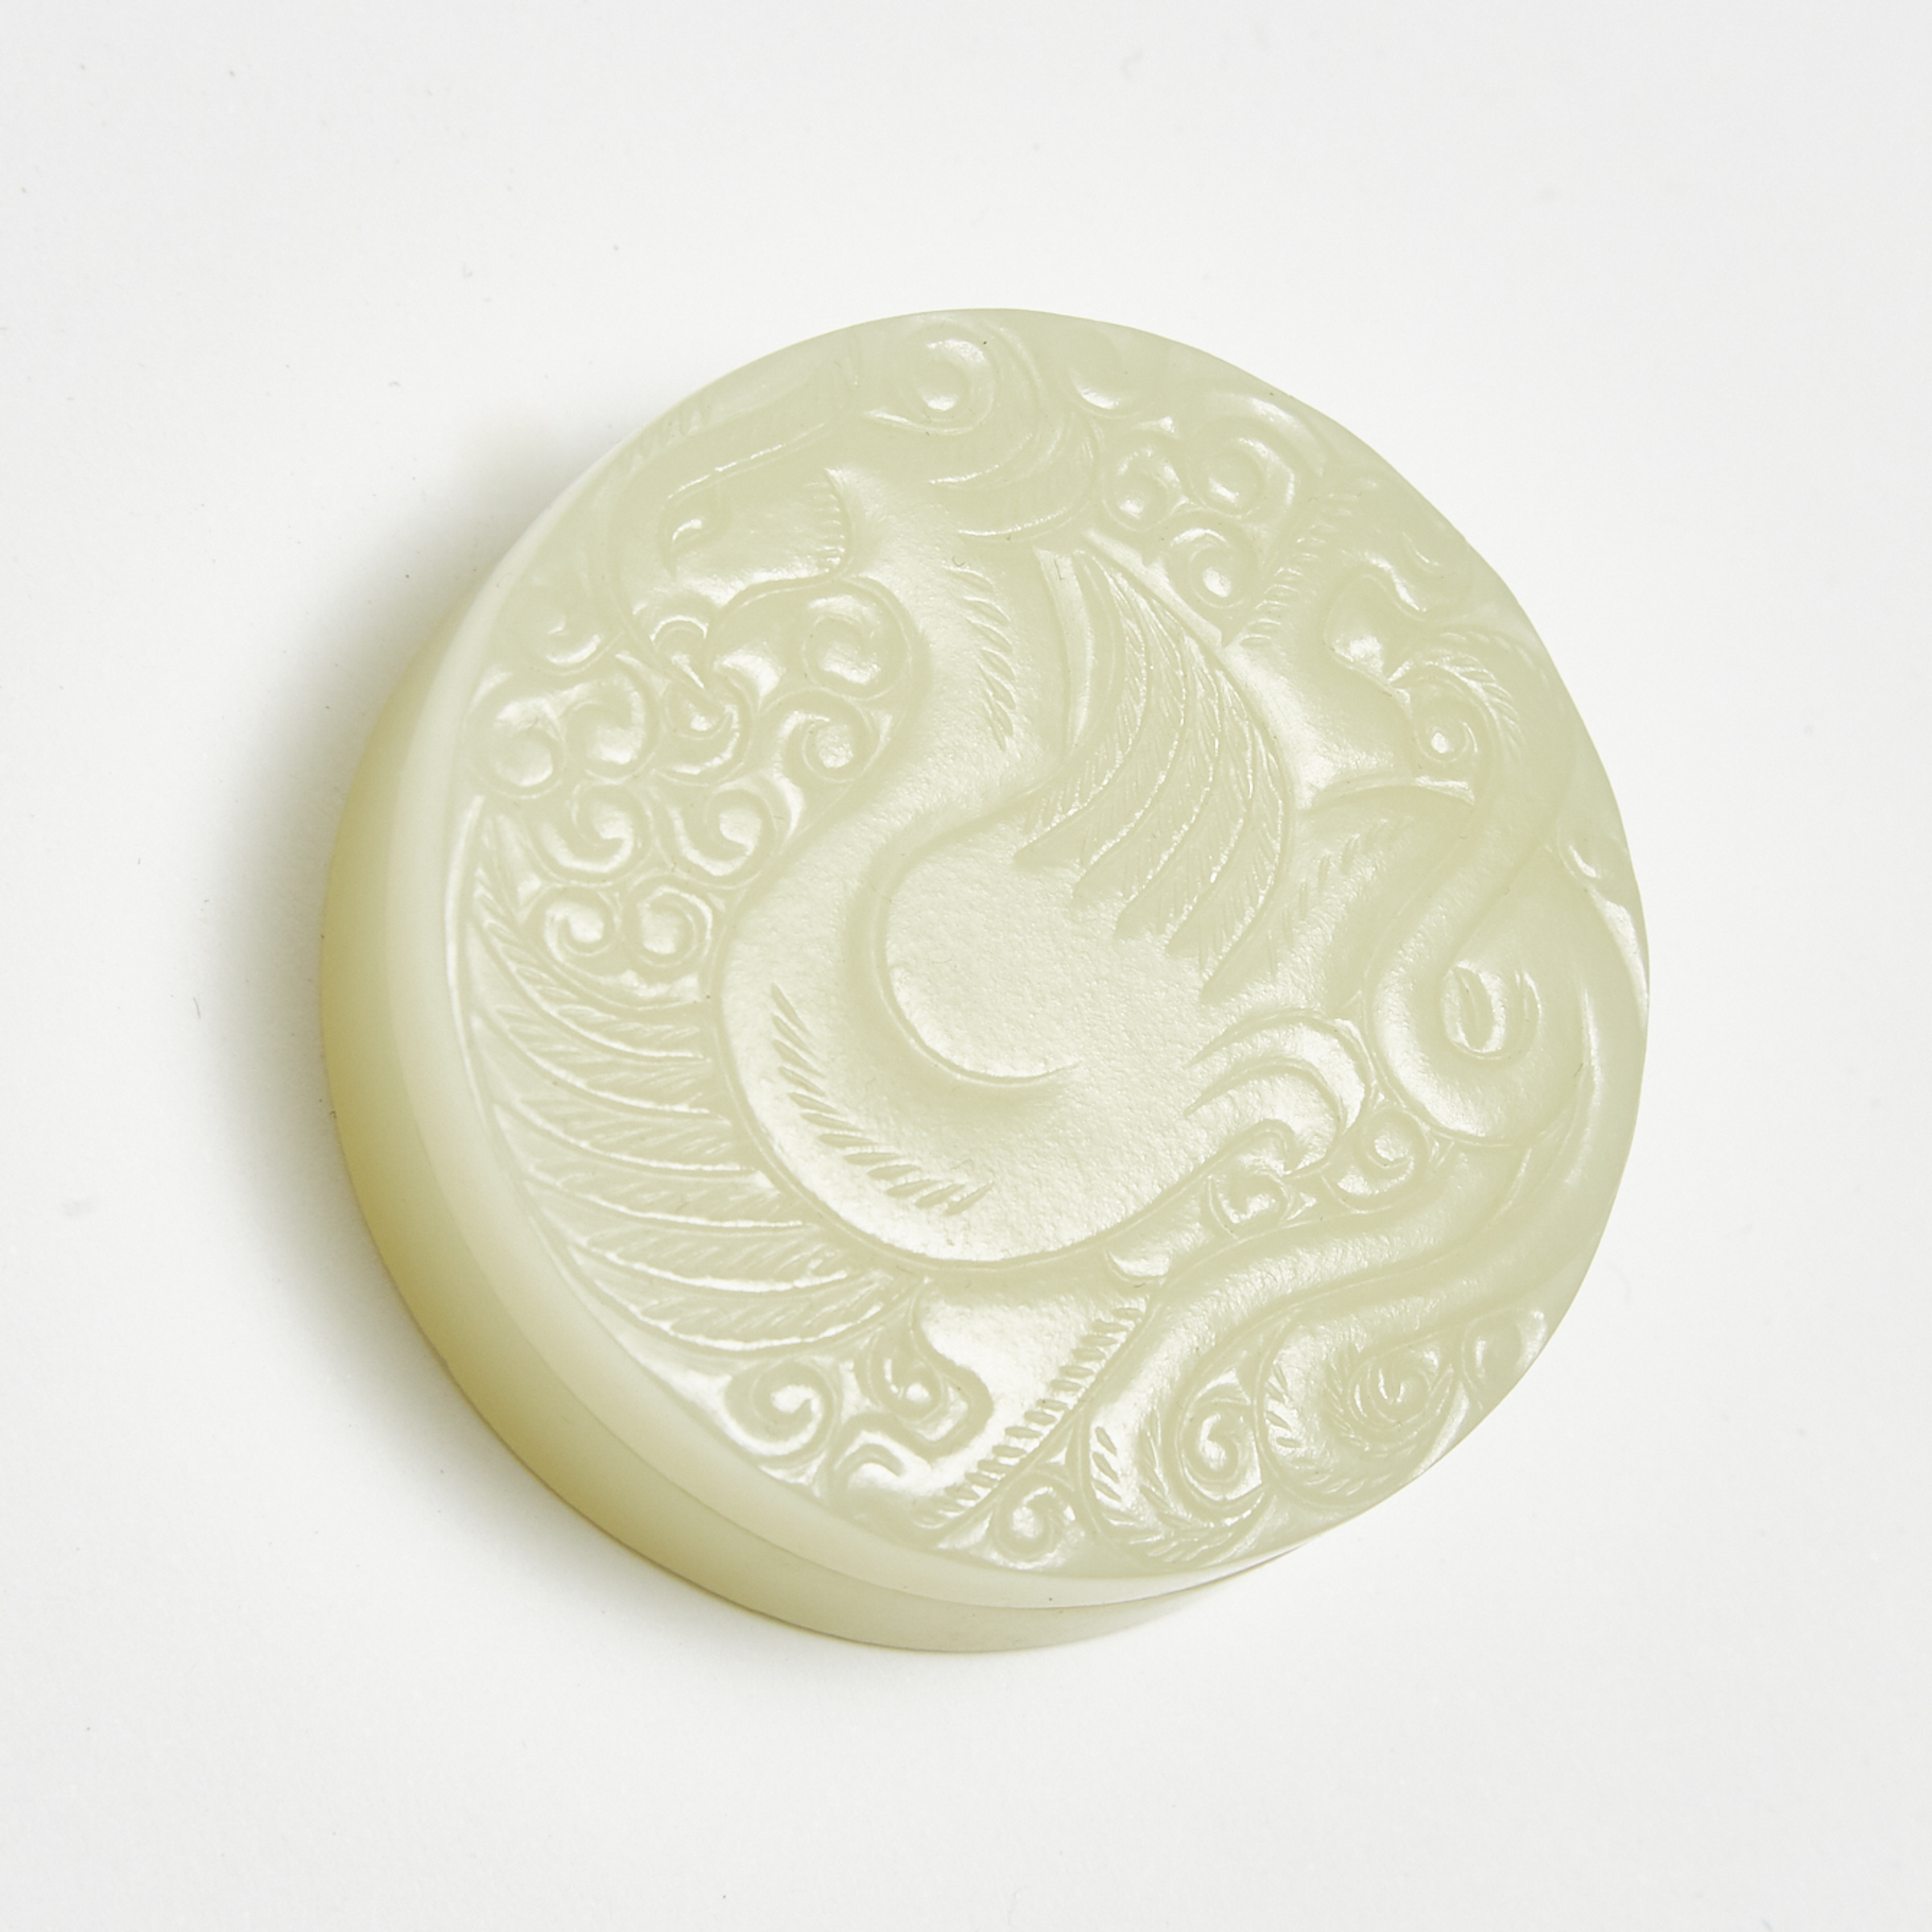 A Celadon White Jade Carved Circular Box